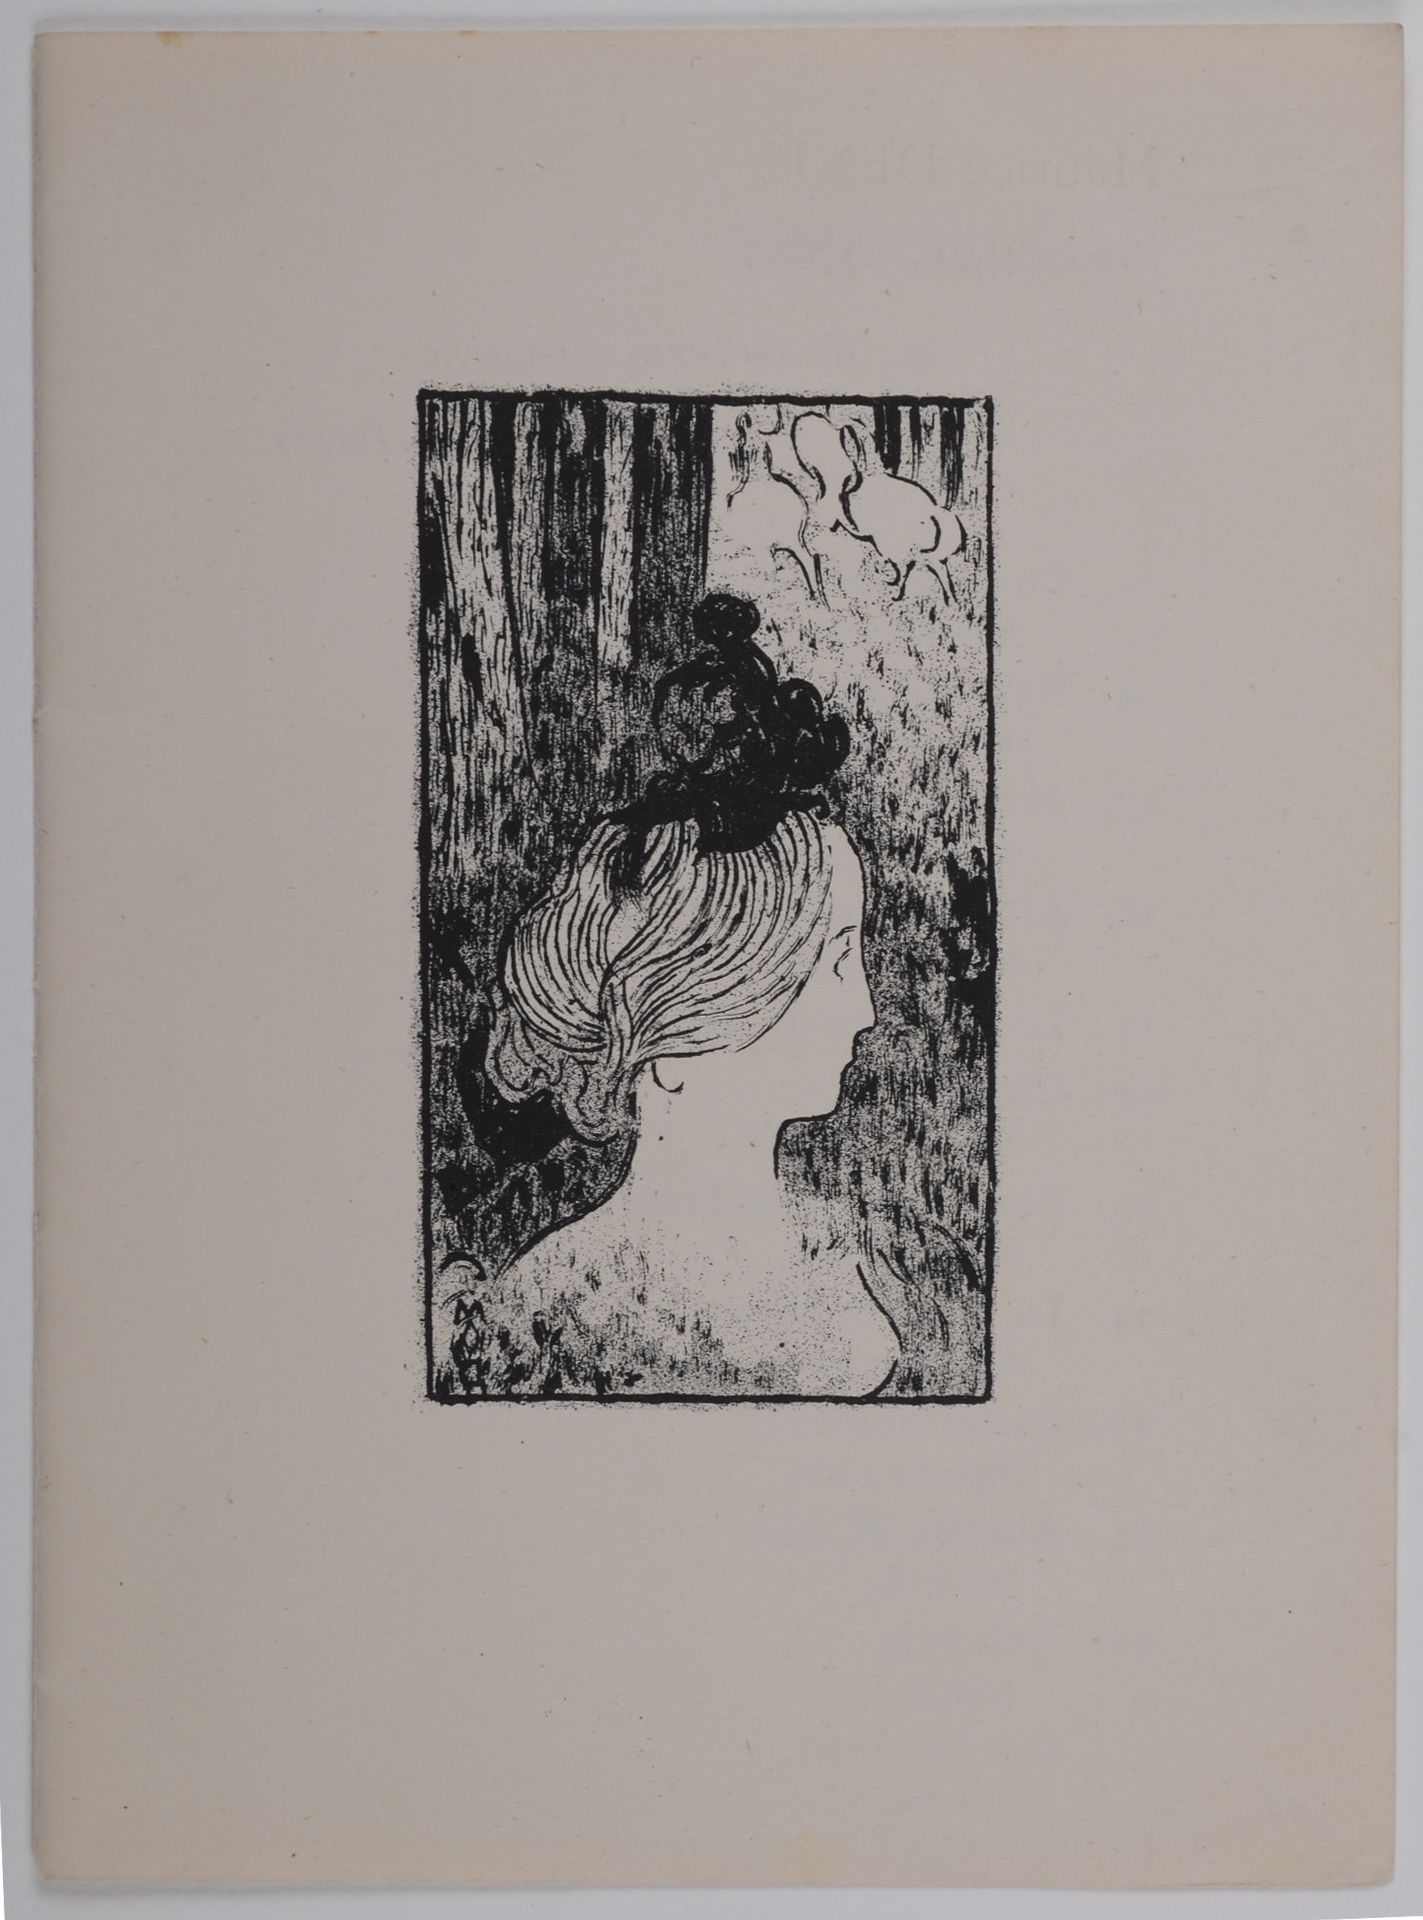 MAURICE DENIS Maurice Denis

La signora nel giardino d'oro, 1894

 

 Litografia&hellip;